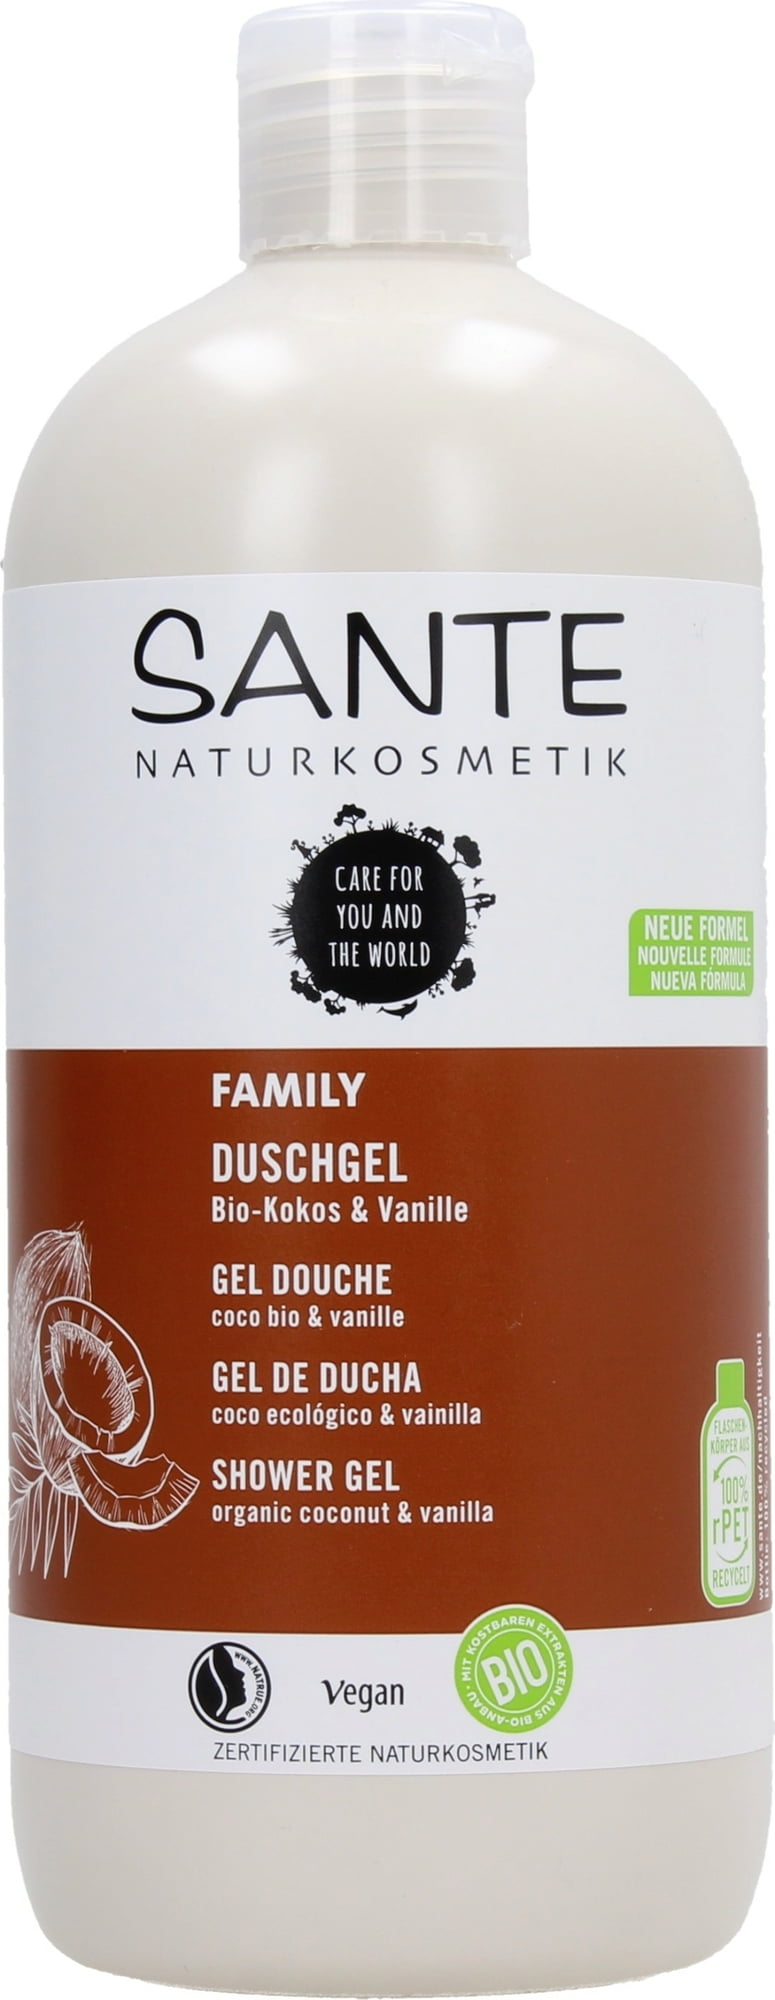 Sante FAMILY Duschgel Bio-Kokos & Vanille 500ml